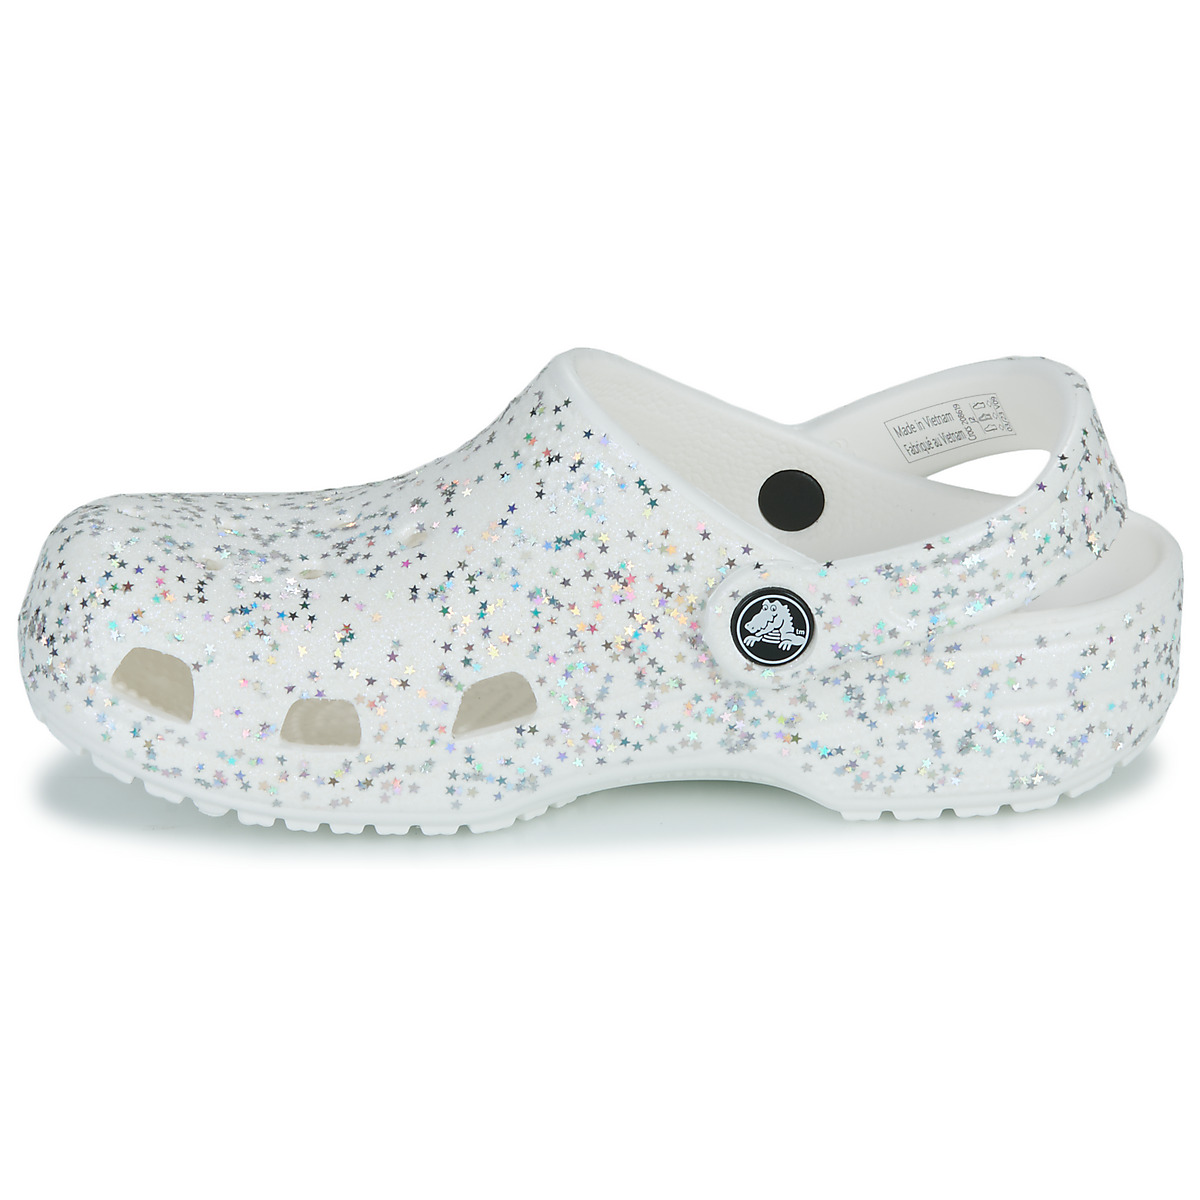 Crocs Blanc Classic Starry Glitter Clog K zYn08YAj